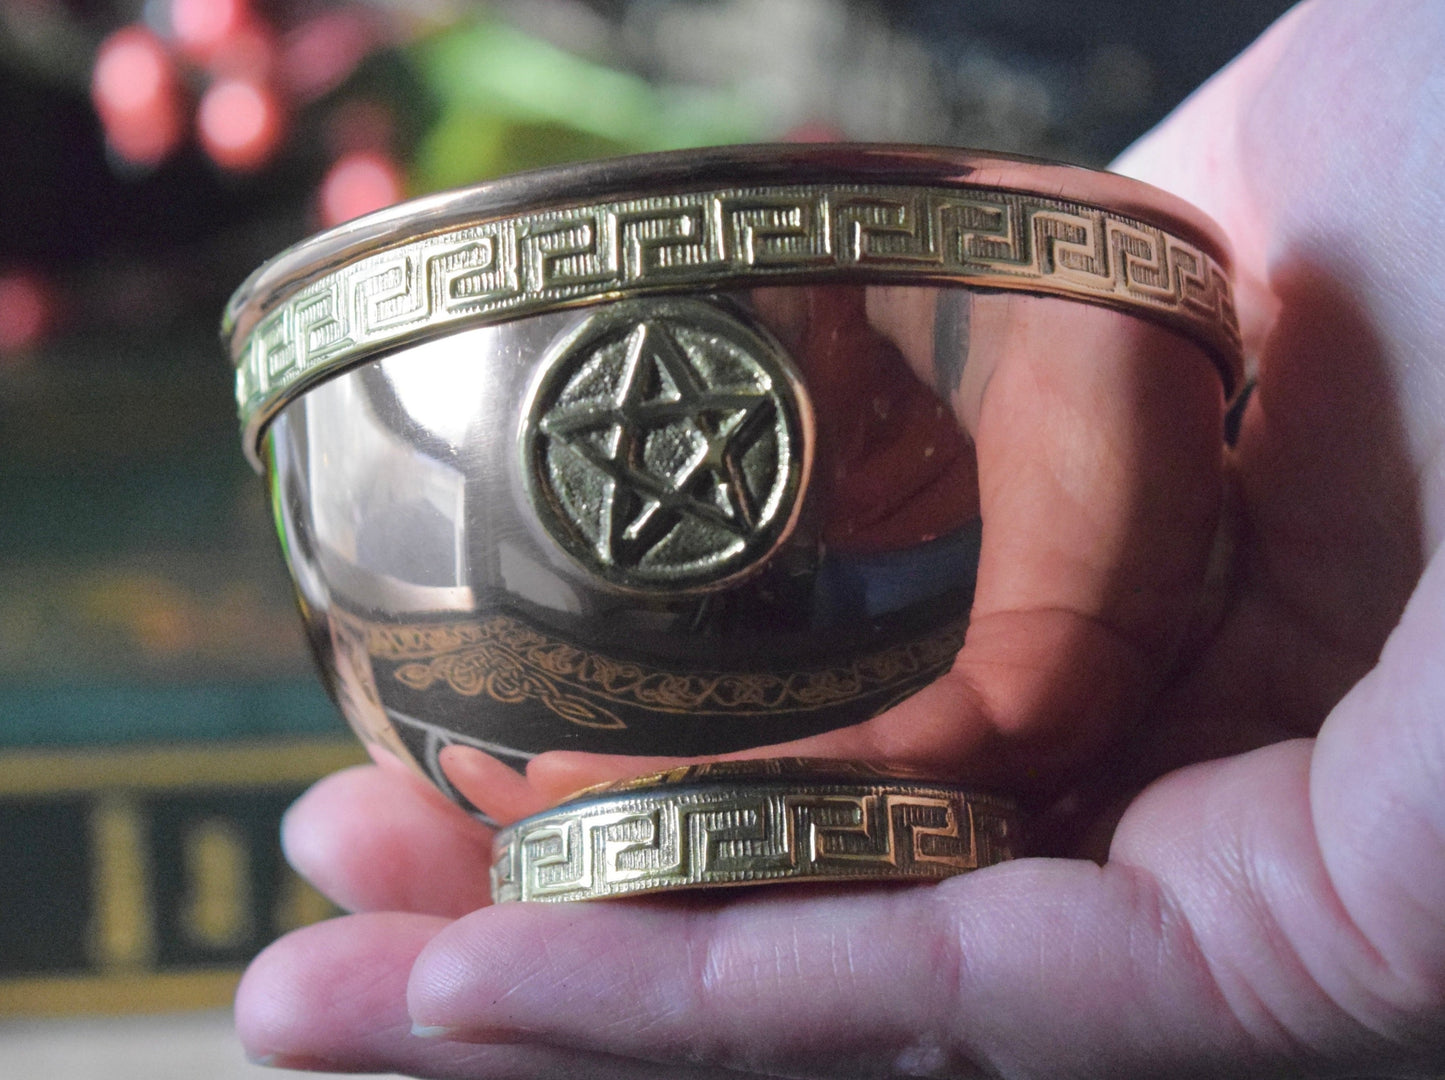 Copper Offering Bowl - Pentagram